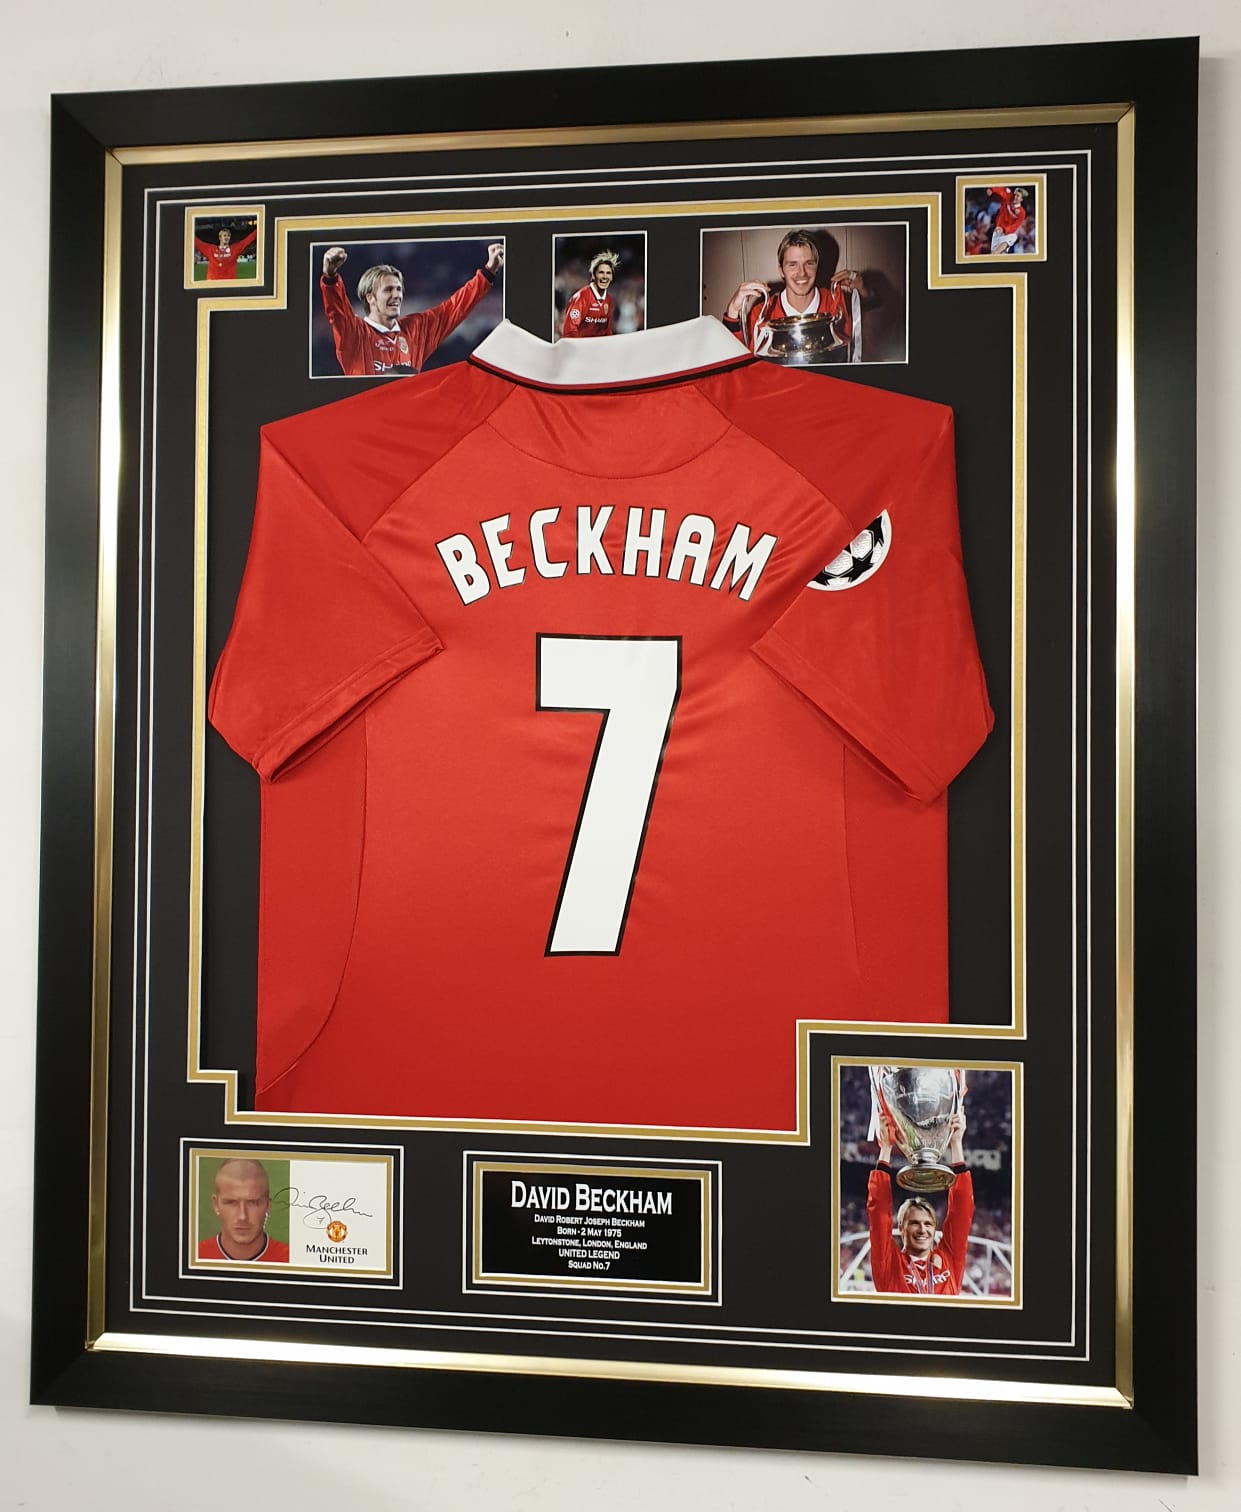 David Beckham signature with Framed 